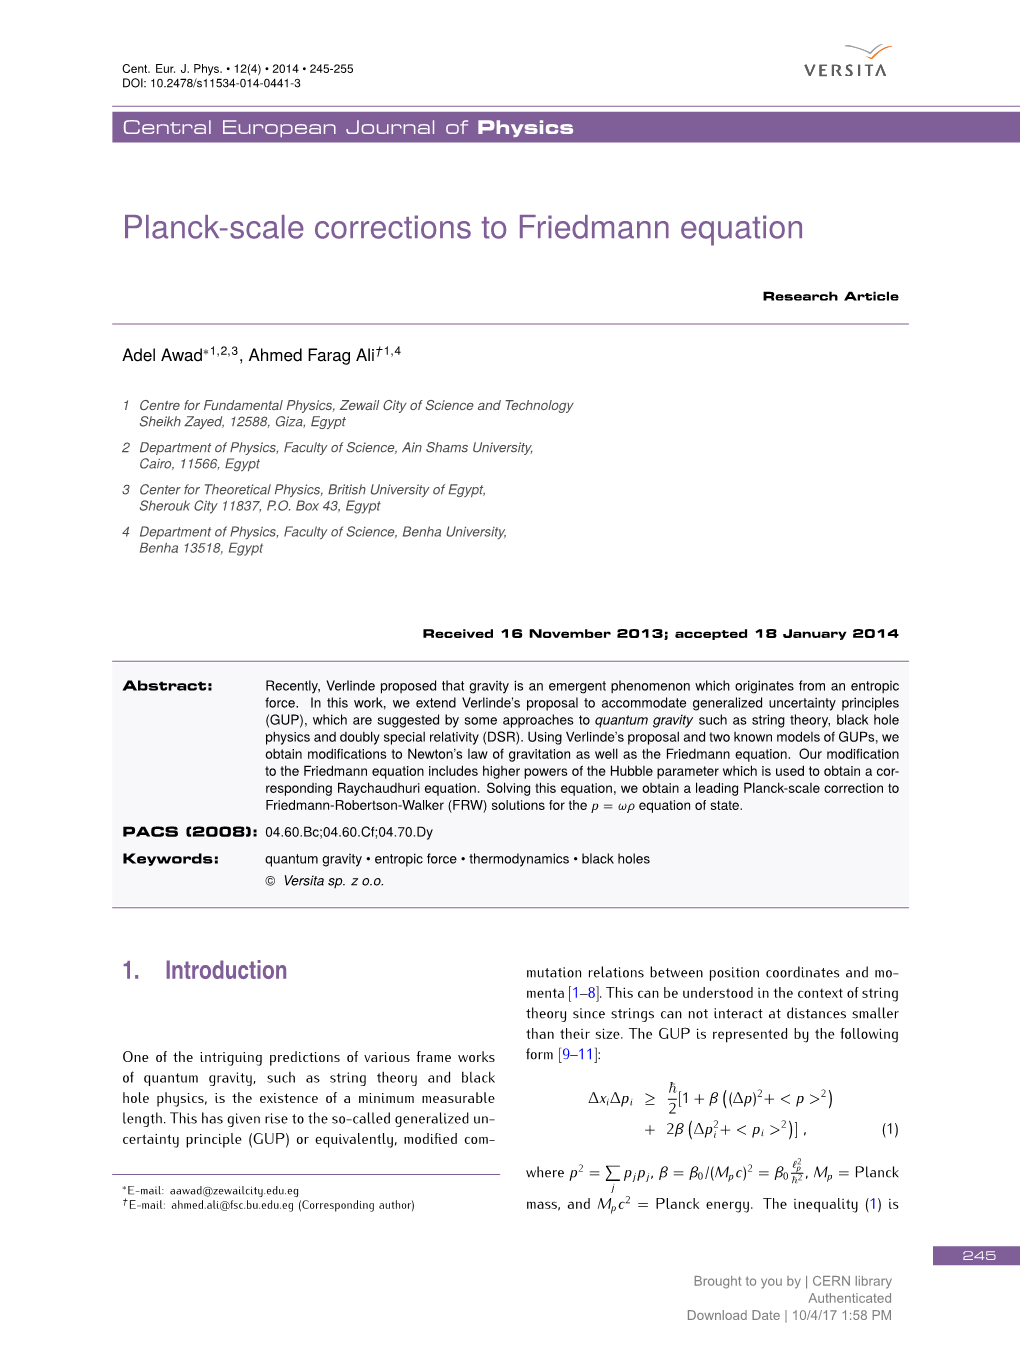 Planck-Scale Corrections to Friedmann Equation